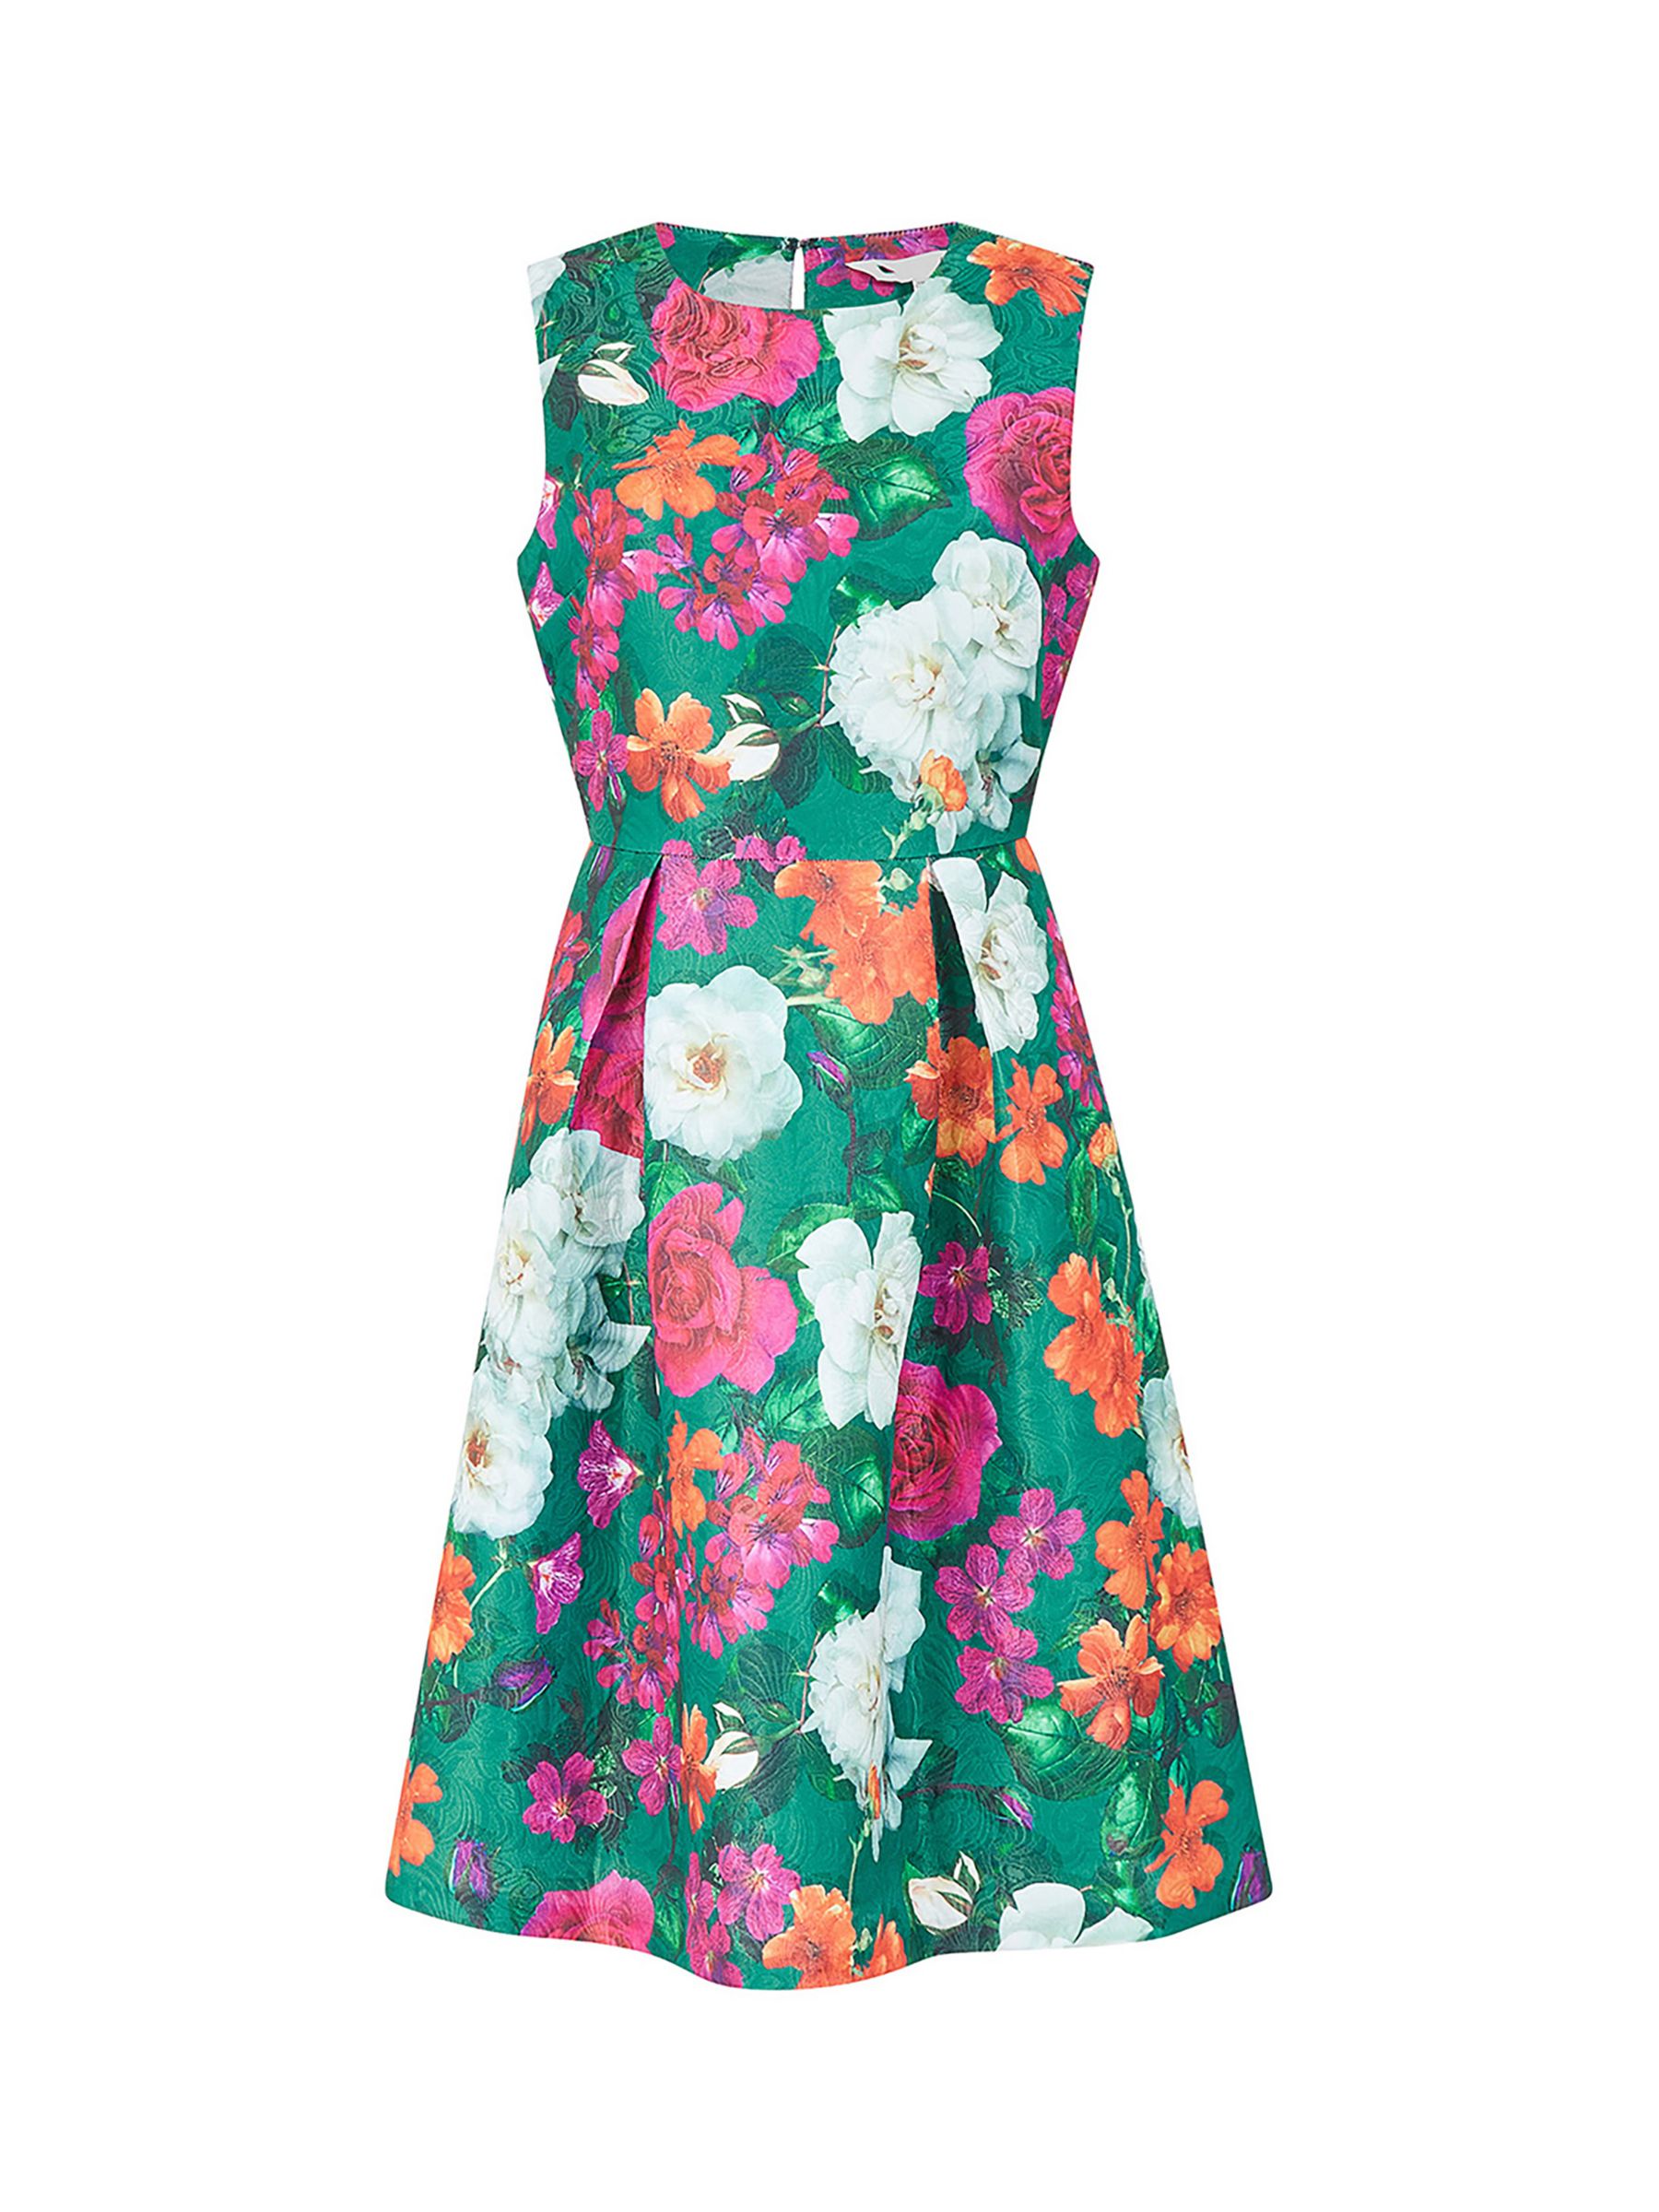 Yumi Floral Flared Jacquard Dress, Green/Multi at John Lewis & Partners